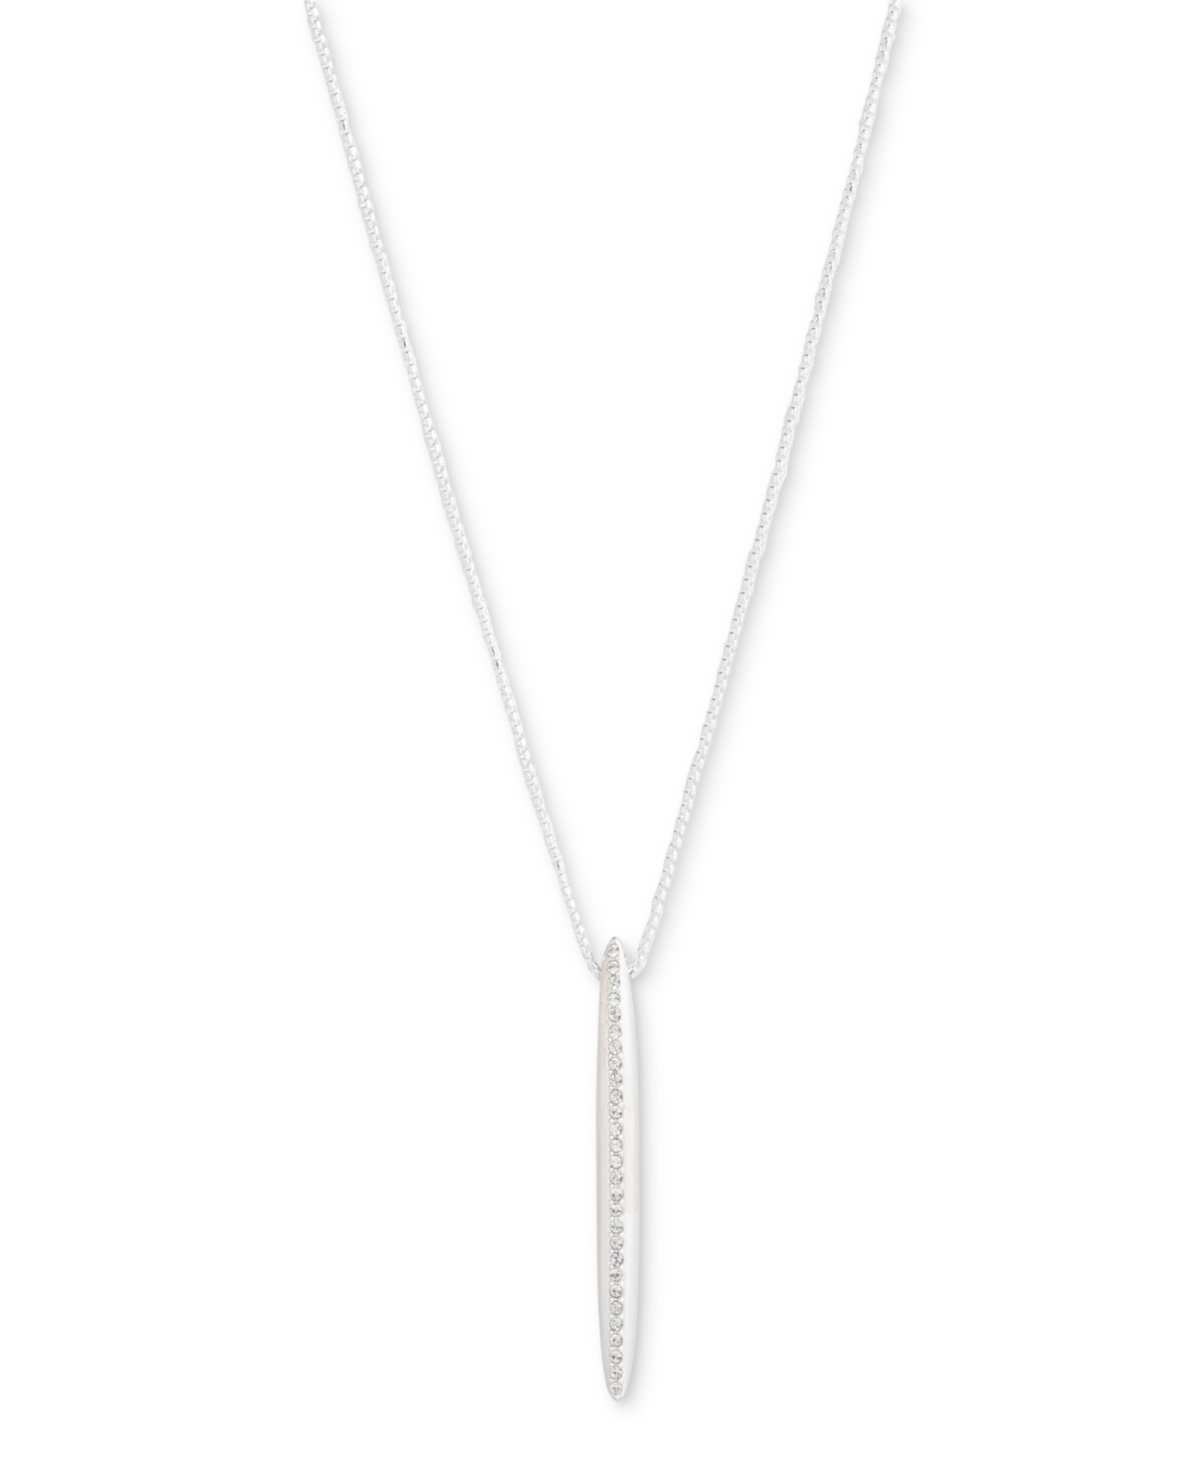 Lauren Ralph Lauren Sterling Silver Pave Sculpted Bar 40" Adjustable Pendant Necklace - Crystal Wh